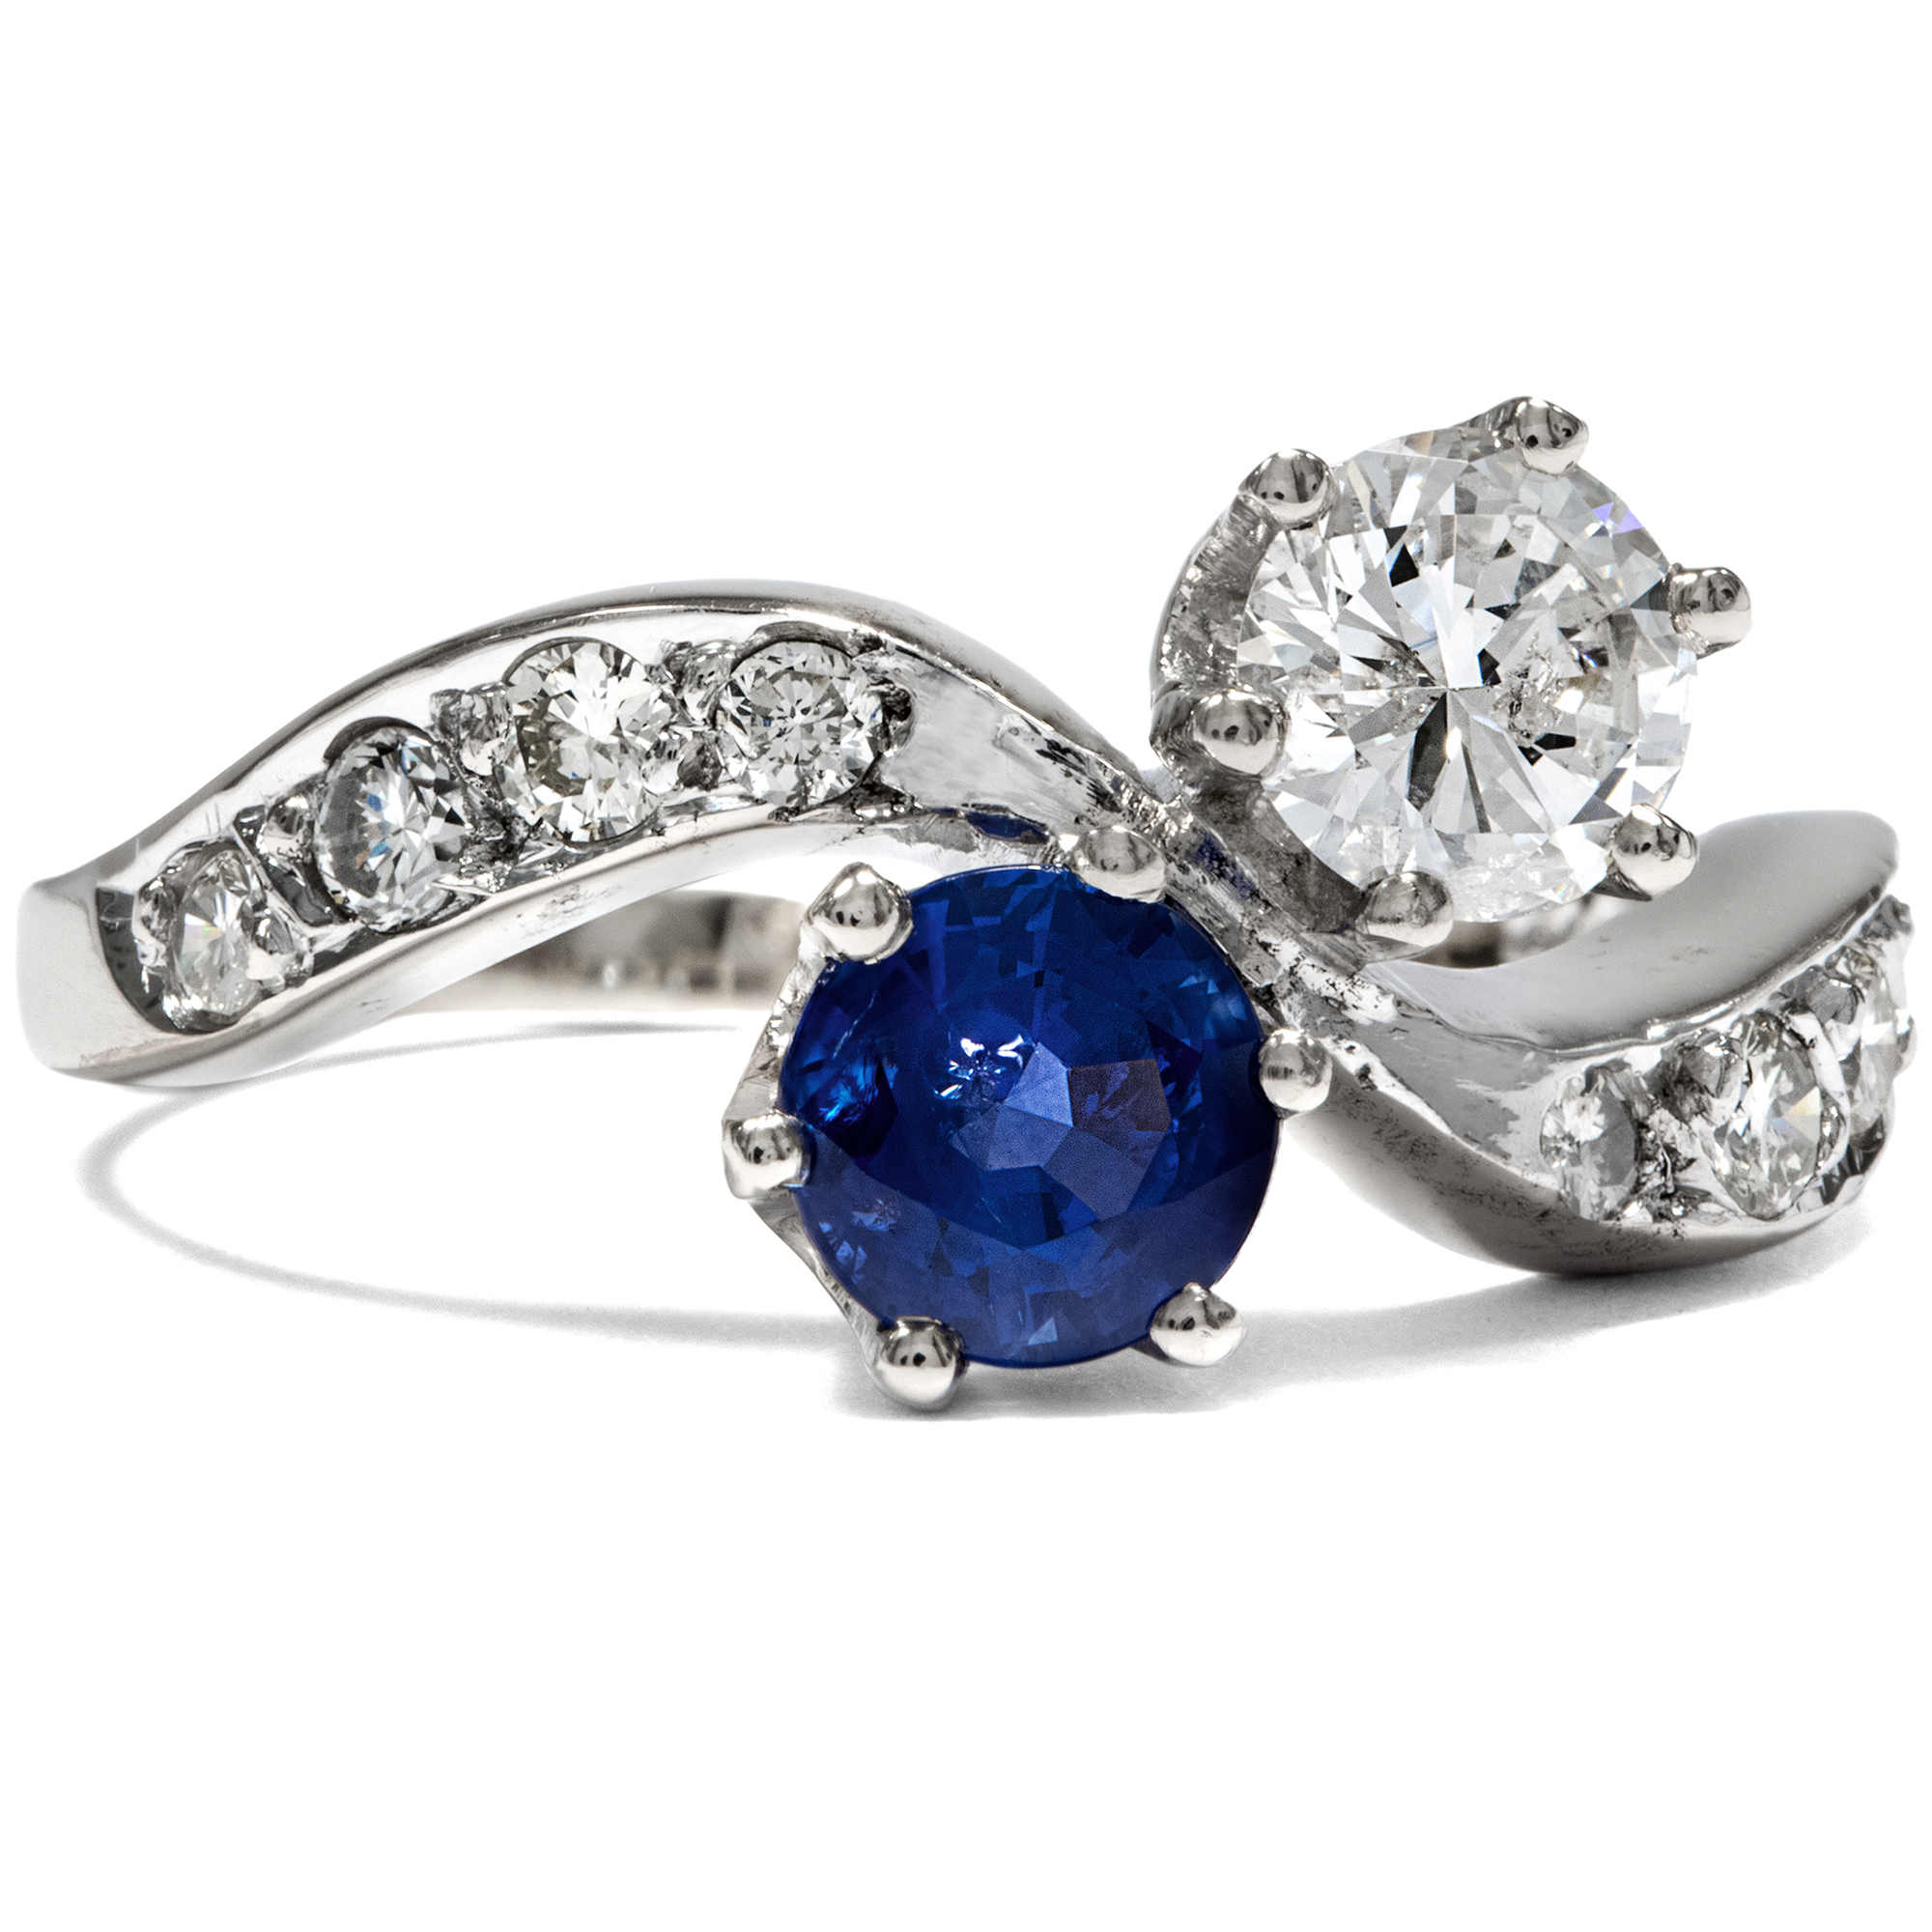 Vintage Toi-et-moi Ring with Diamonds & Blue Sapphire, c. 1970